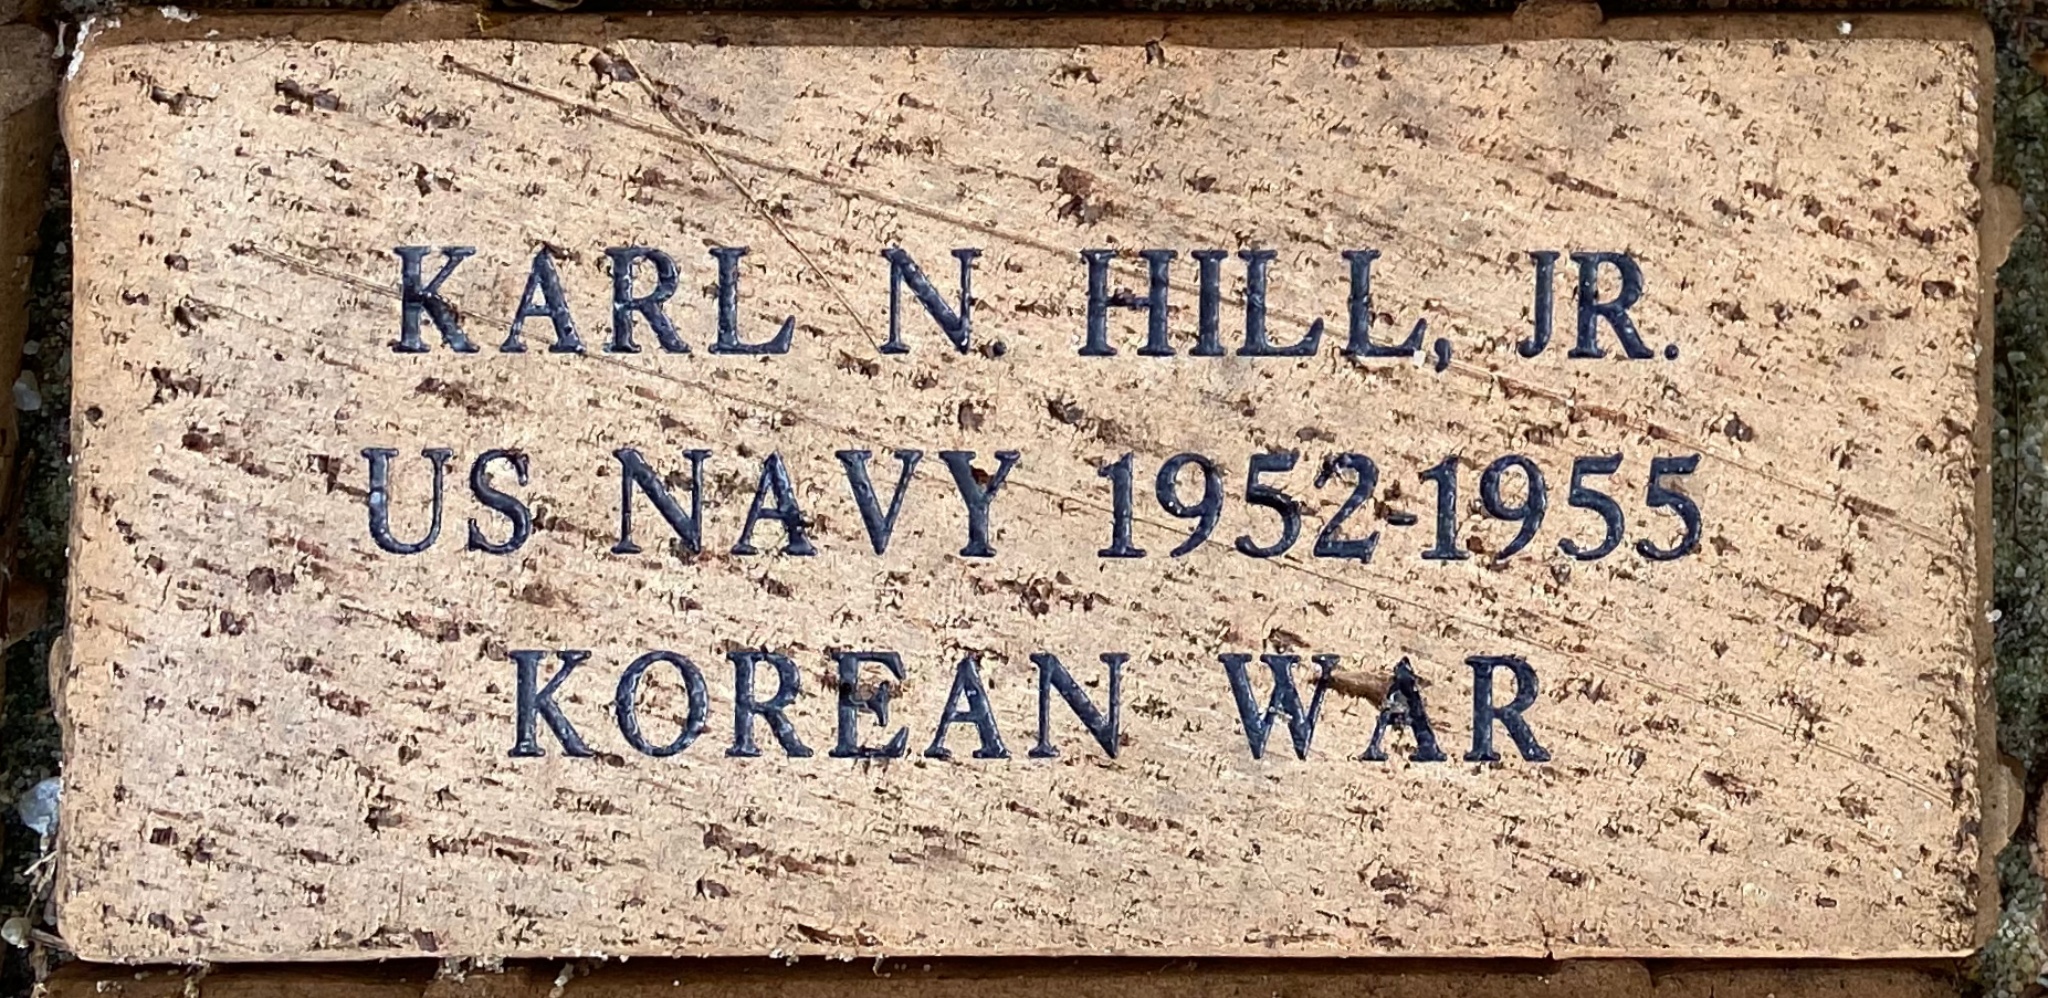 KARL N. HILL, JR. US NAVY 1952-1955 KOREAN WAR